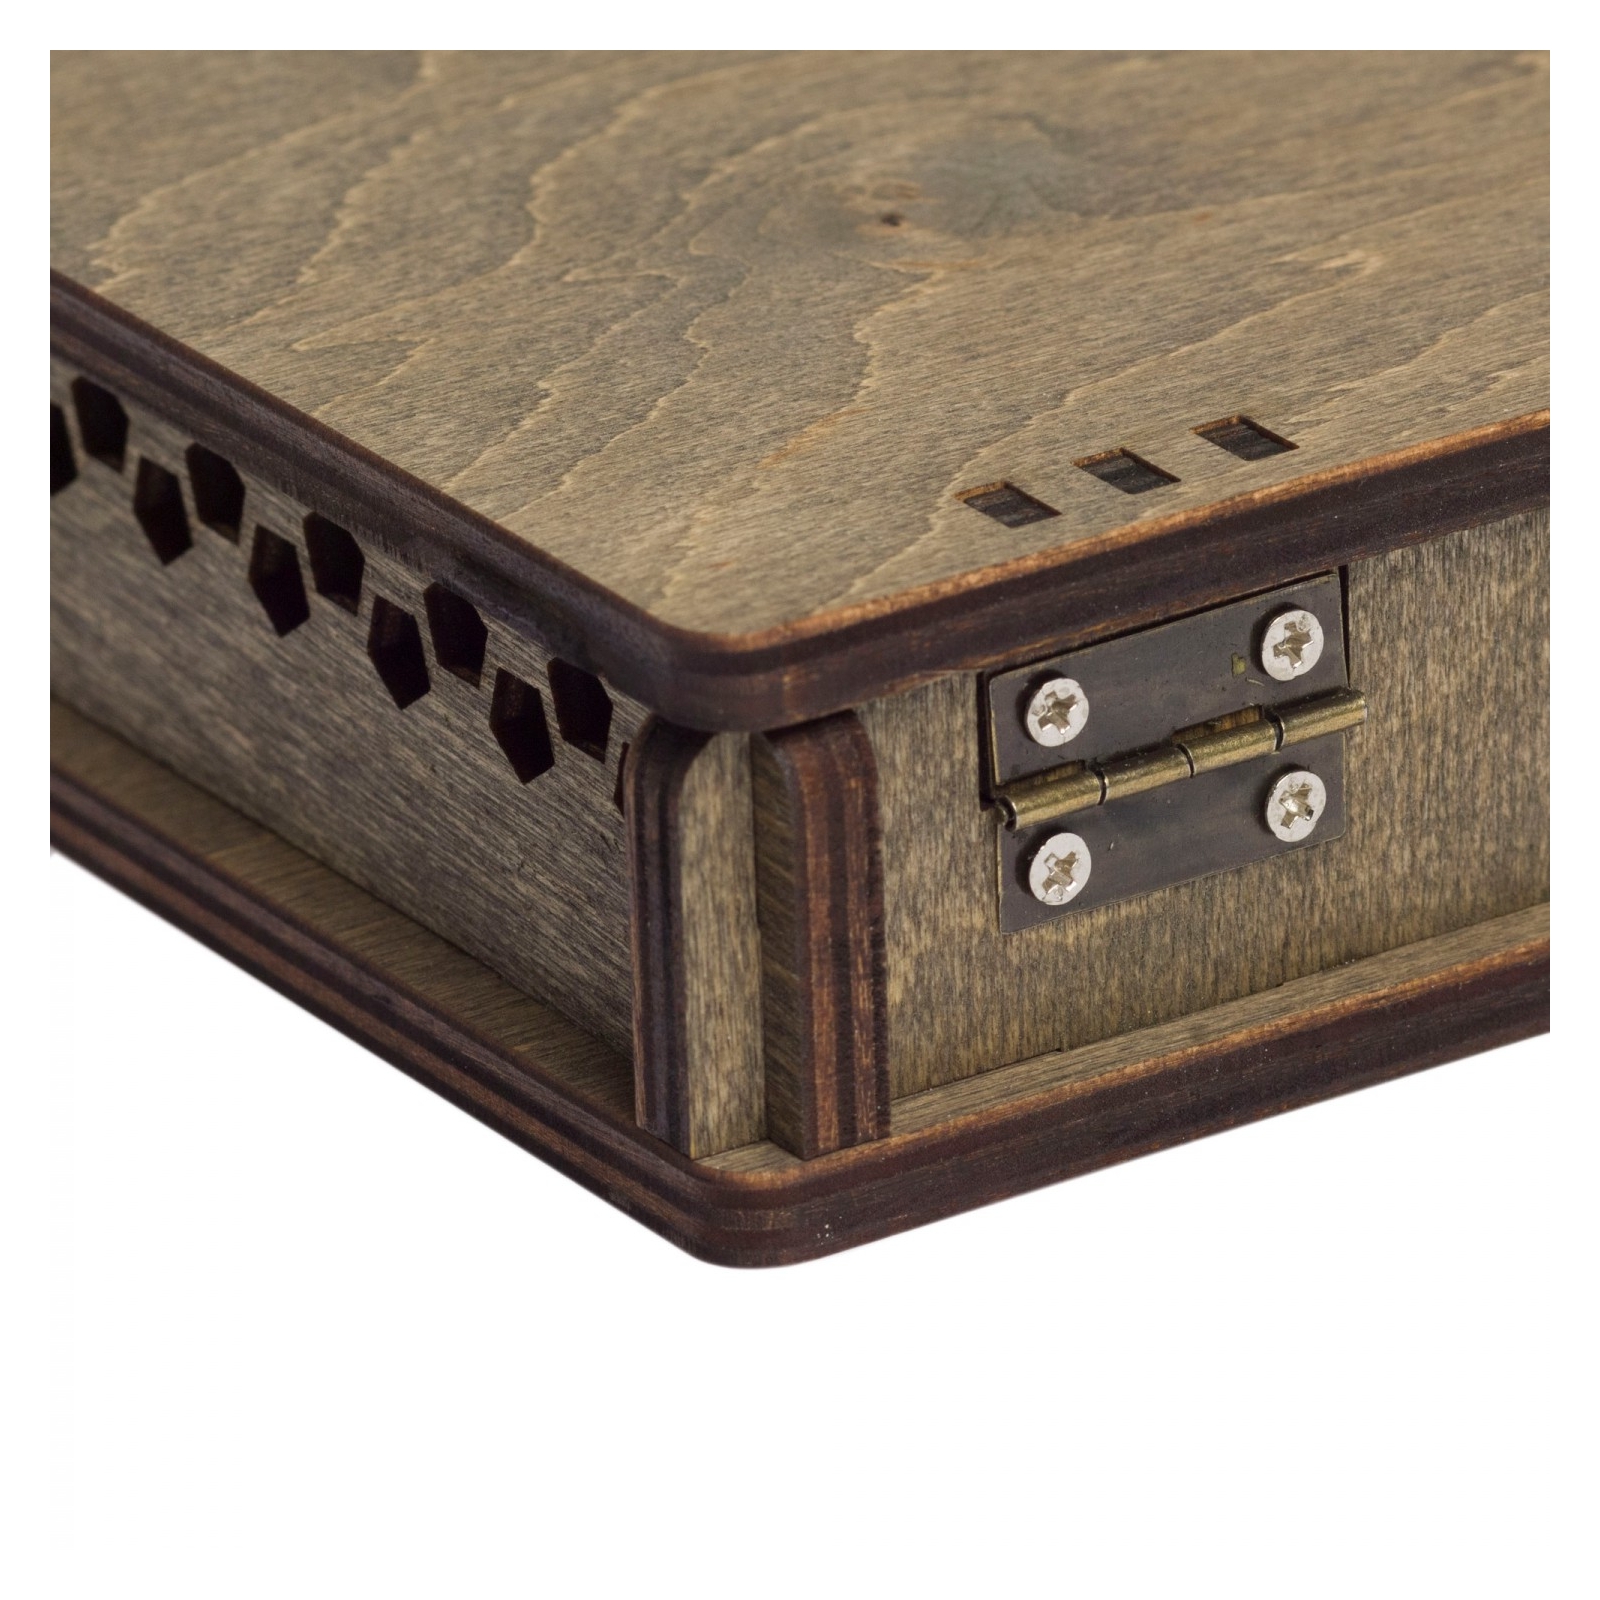 112Plywood storage case for 6 stones-1500x1500 (1).jpg